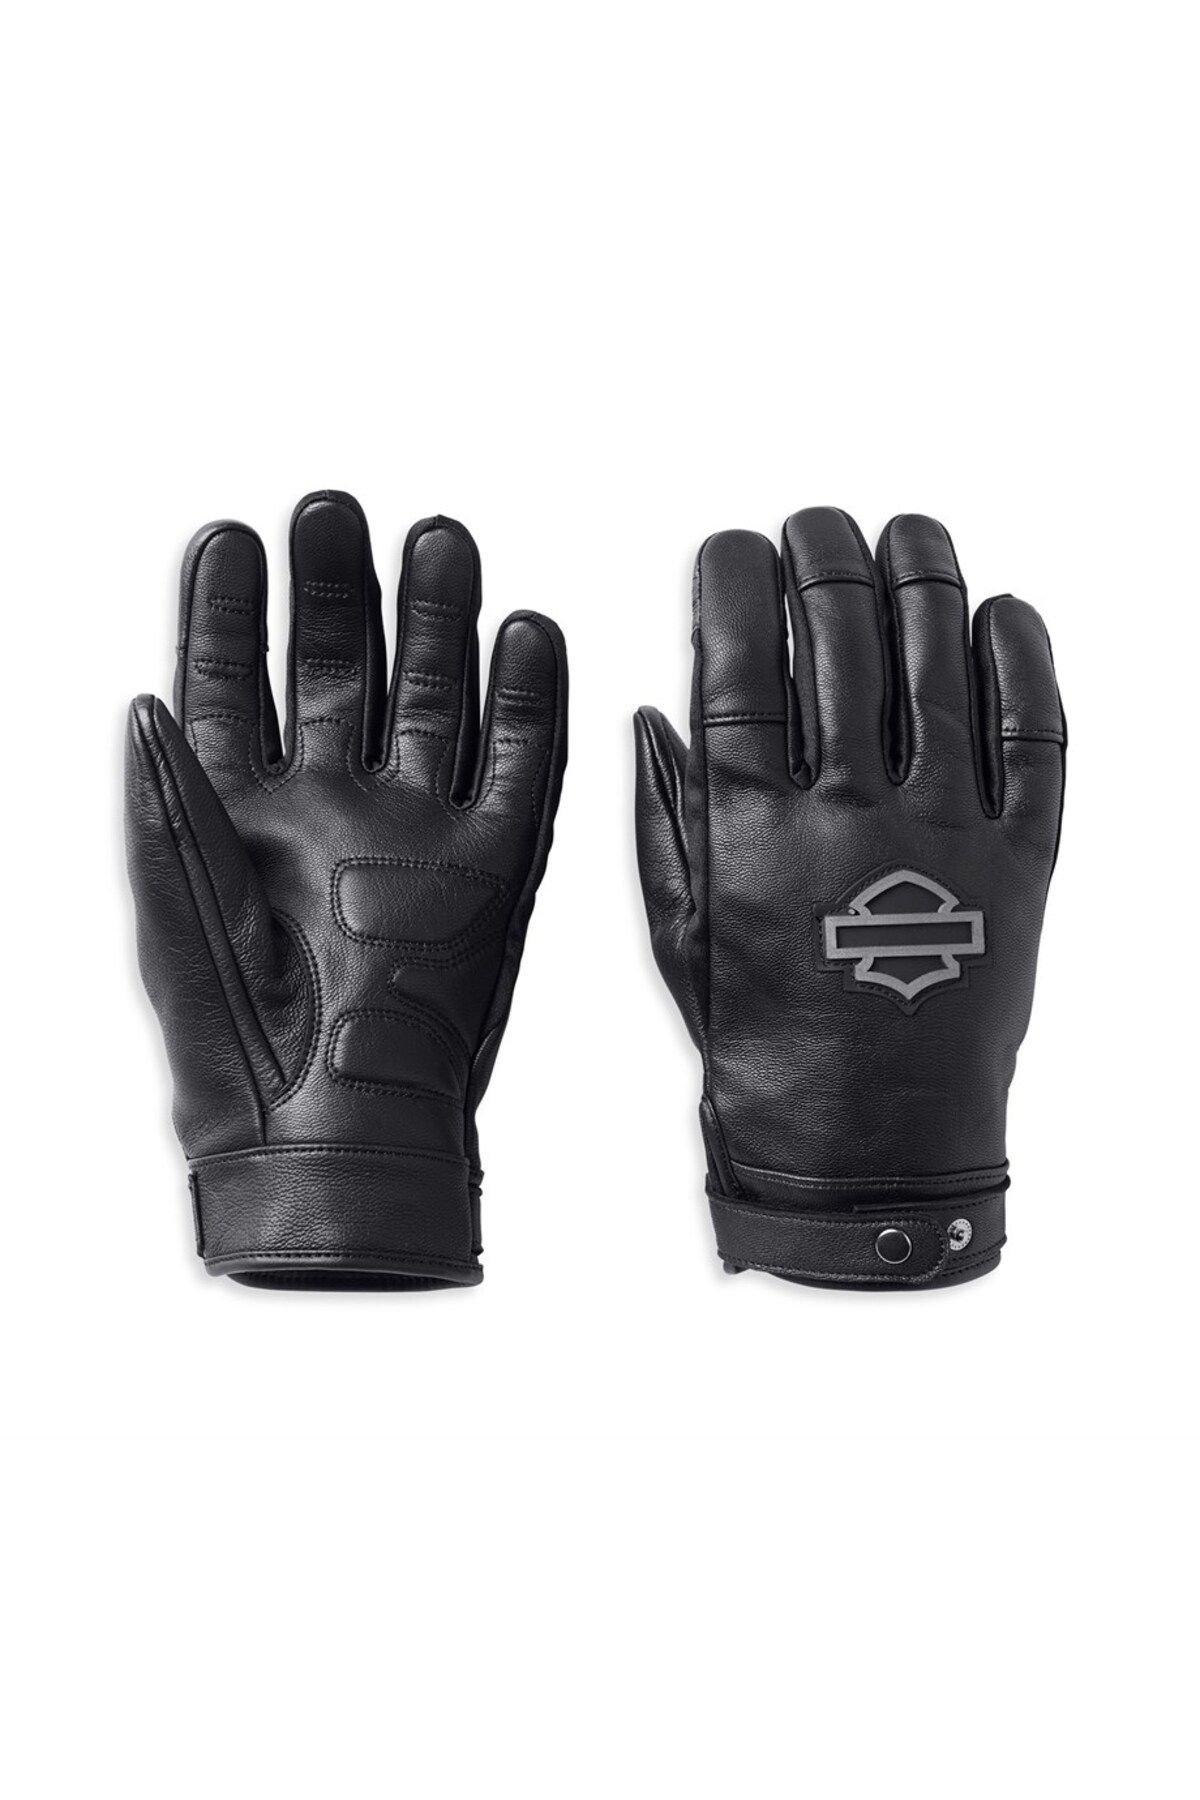 Harley Davidson Harley-davidson Men's Metropolitan Leather Gloves